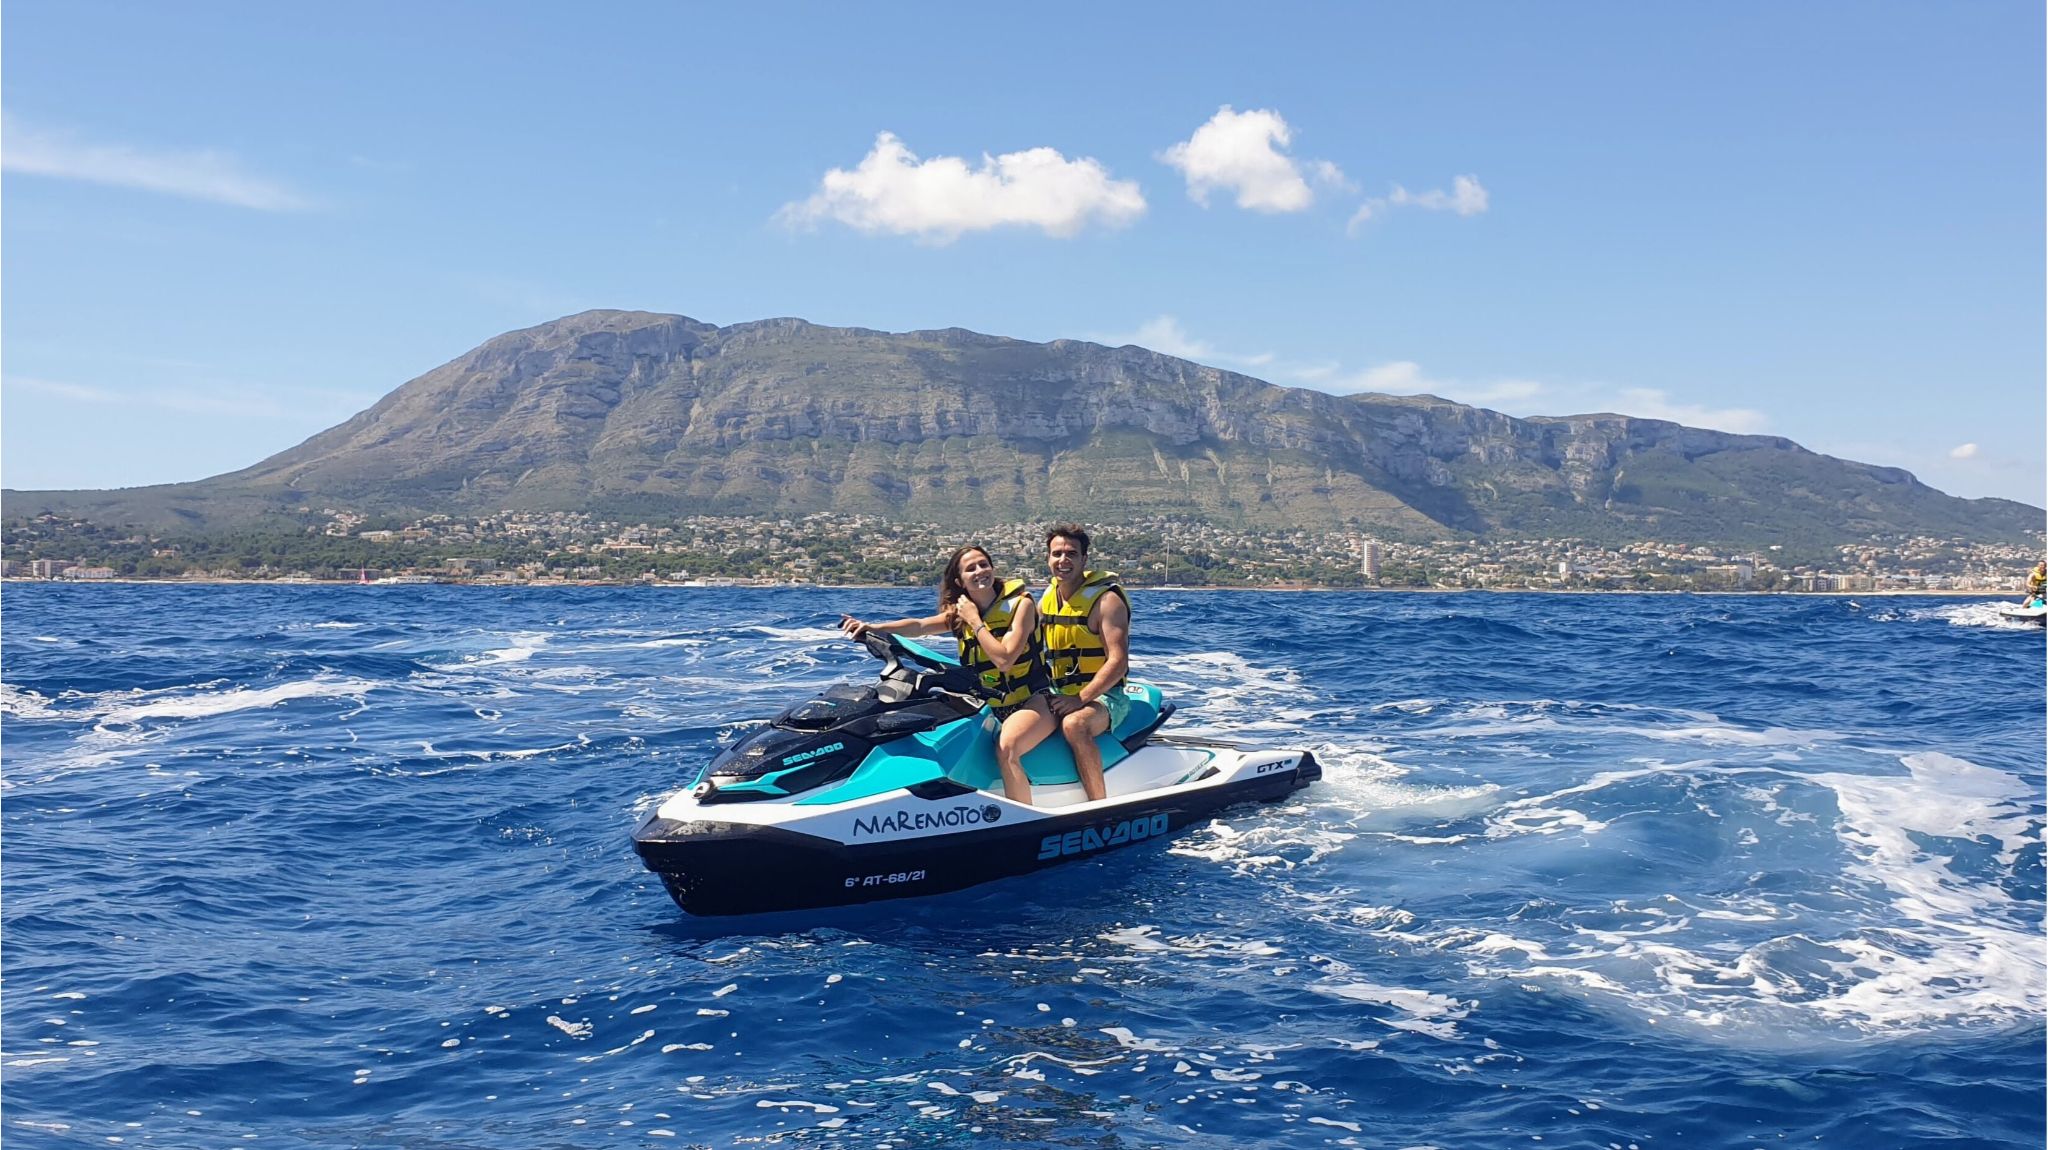 sea-doo riders on the water in Spain